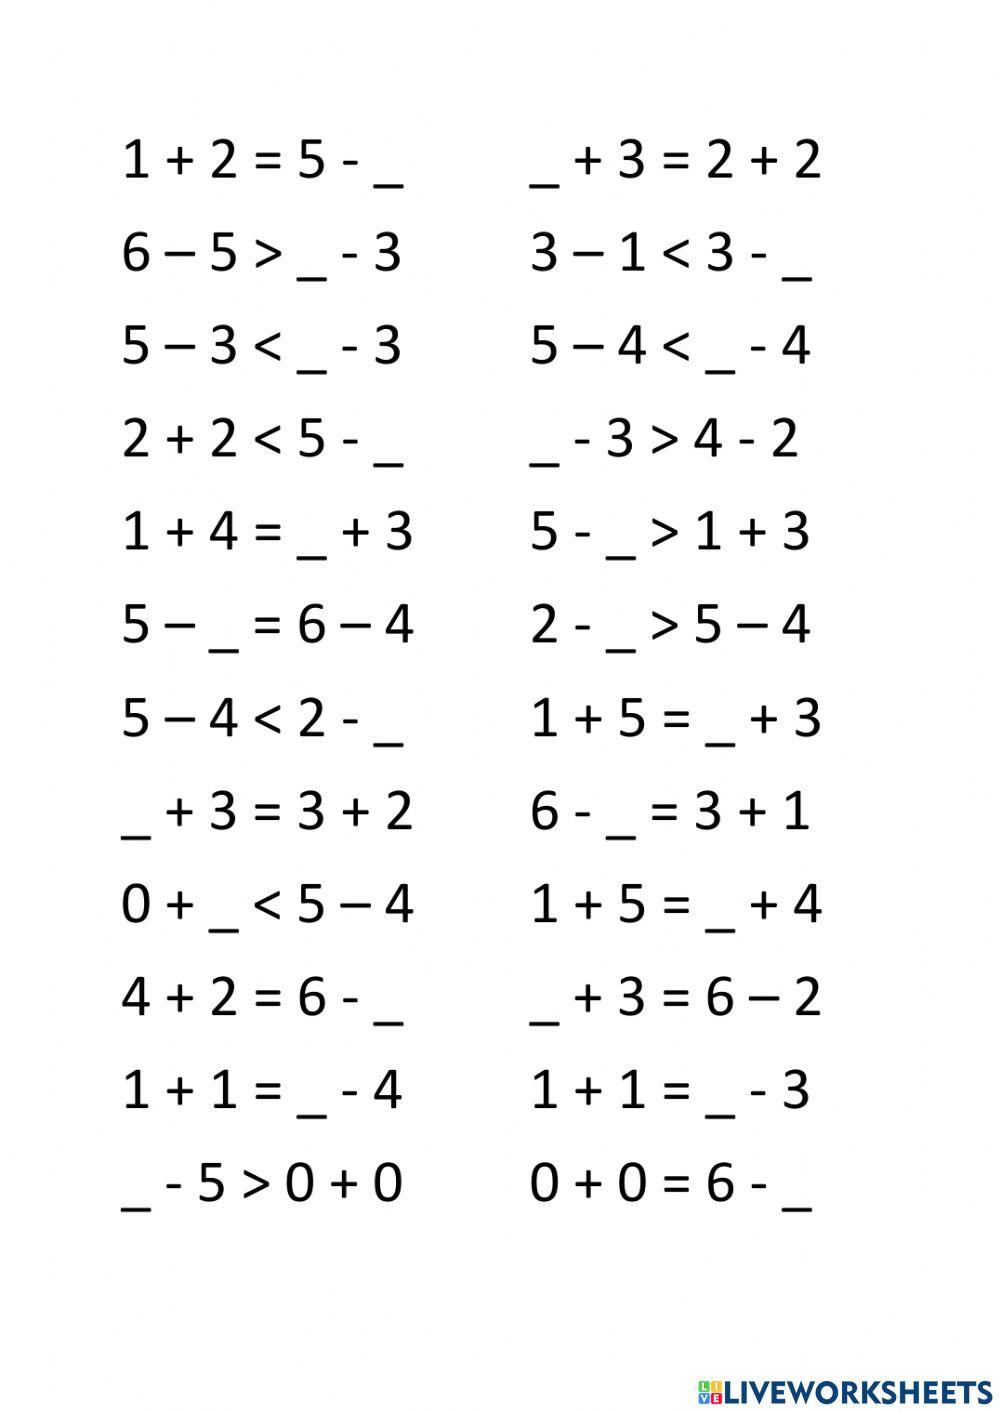 Уравнения и неравенства с числата от 0 до 6